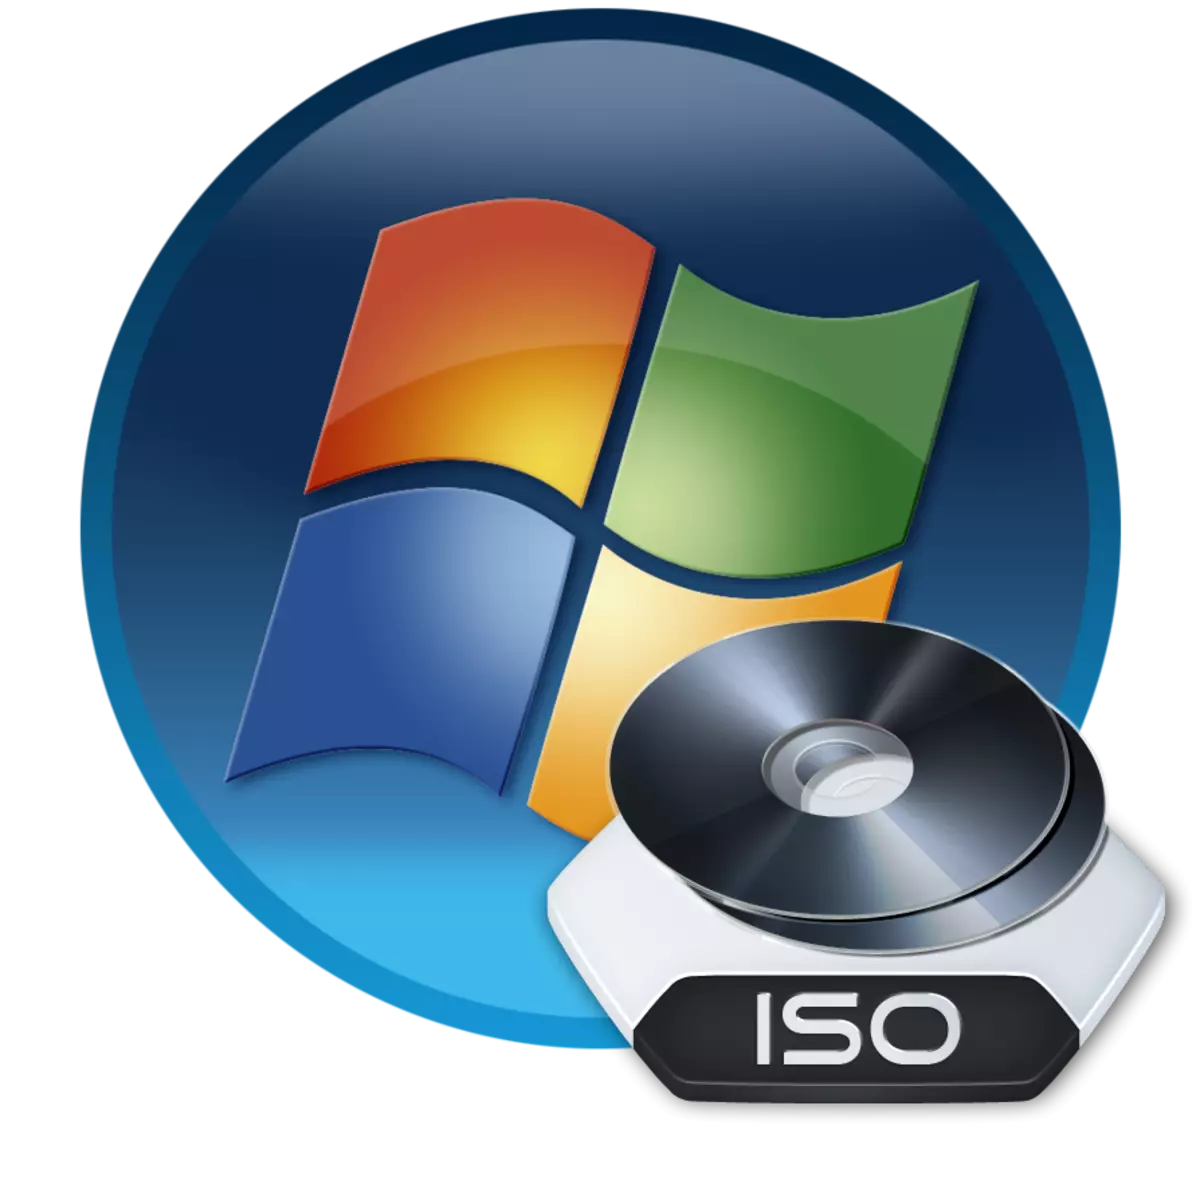 Iso Optical disk Image muWindows 7